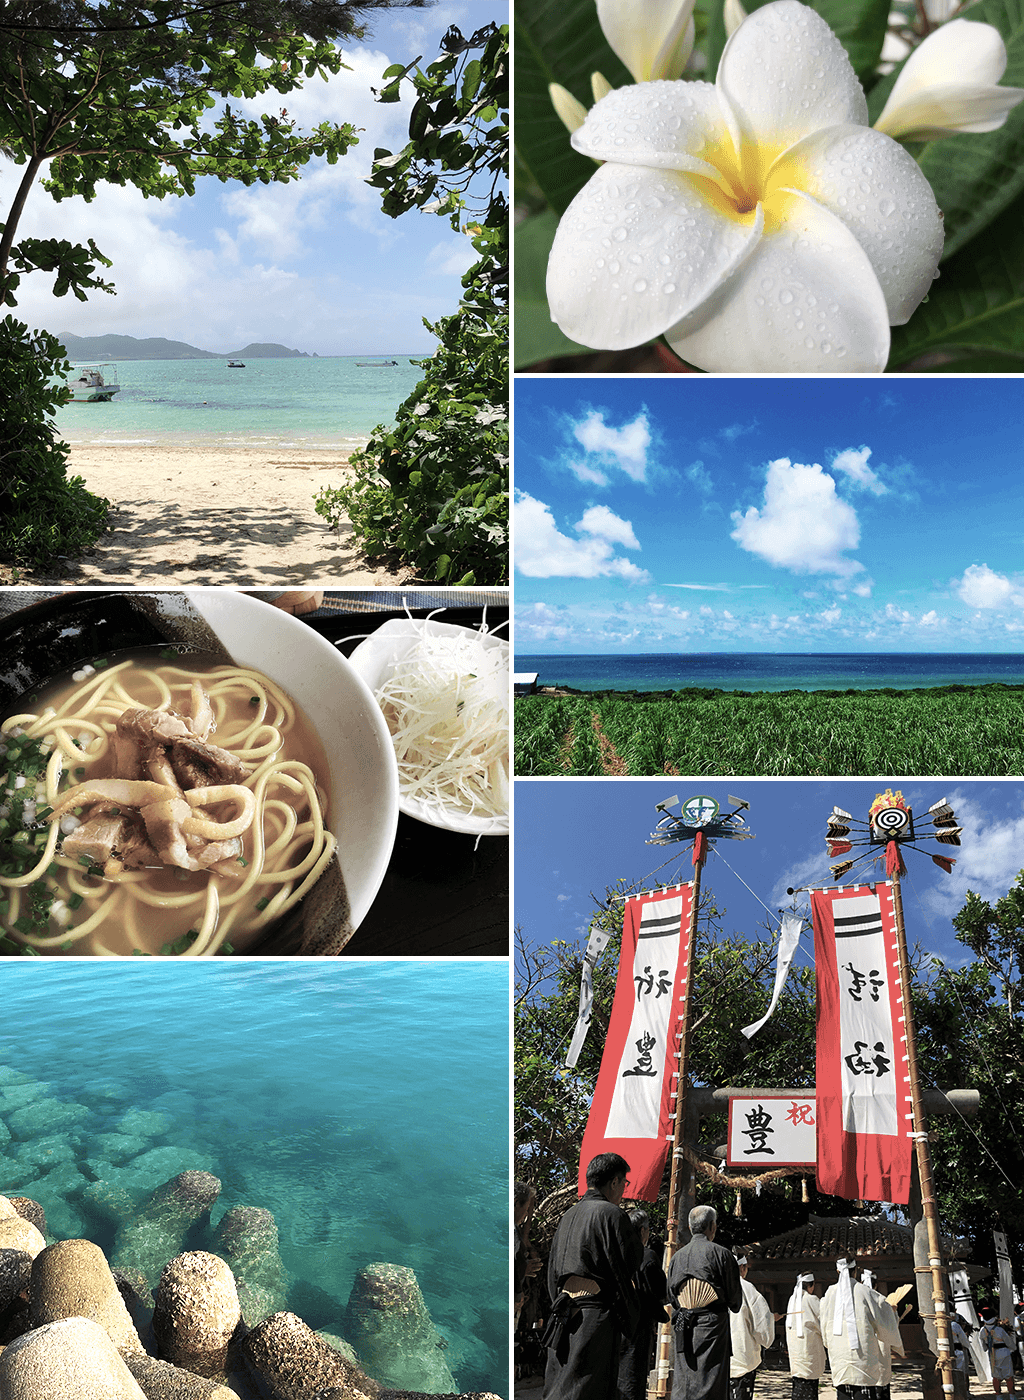 Ishigaki isl. Okinawa JPAN